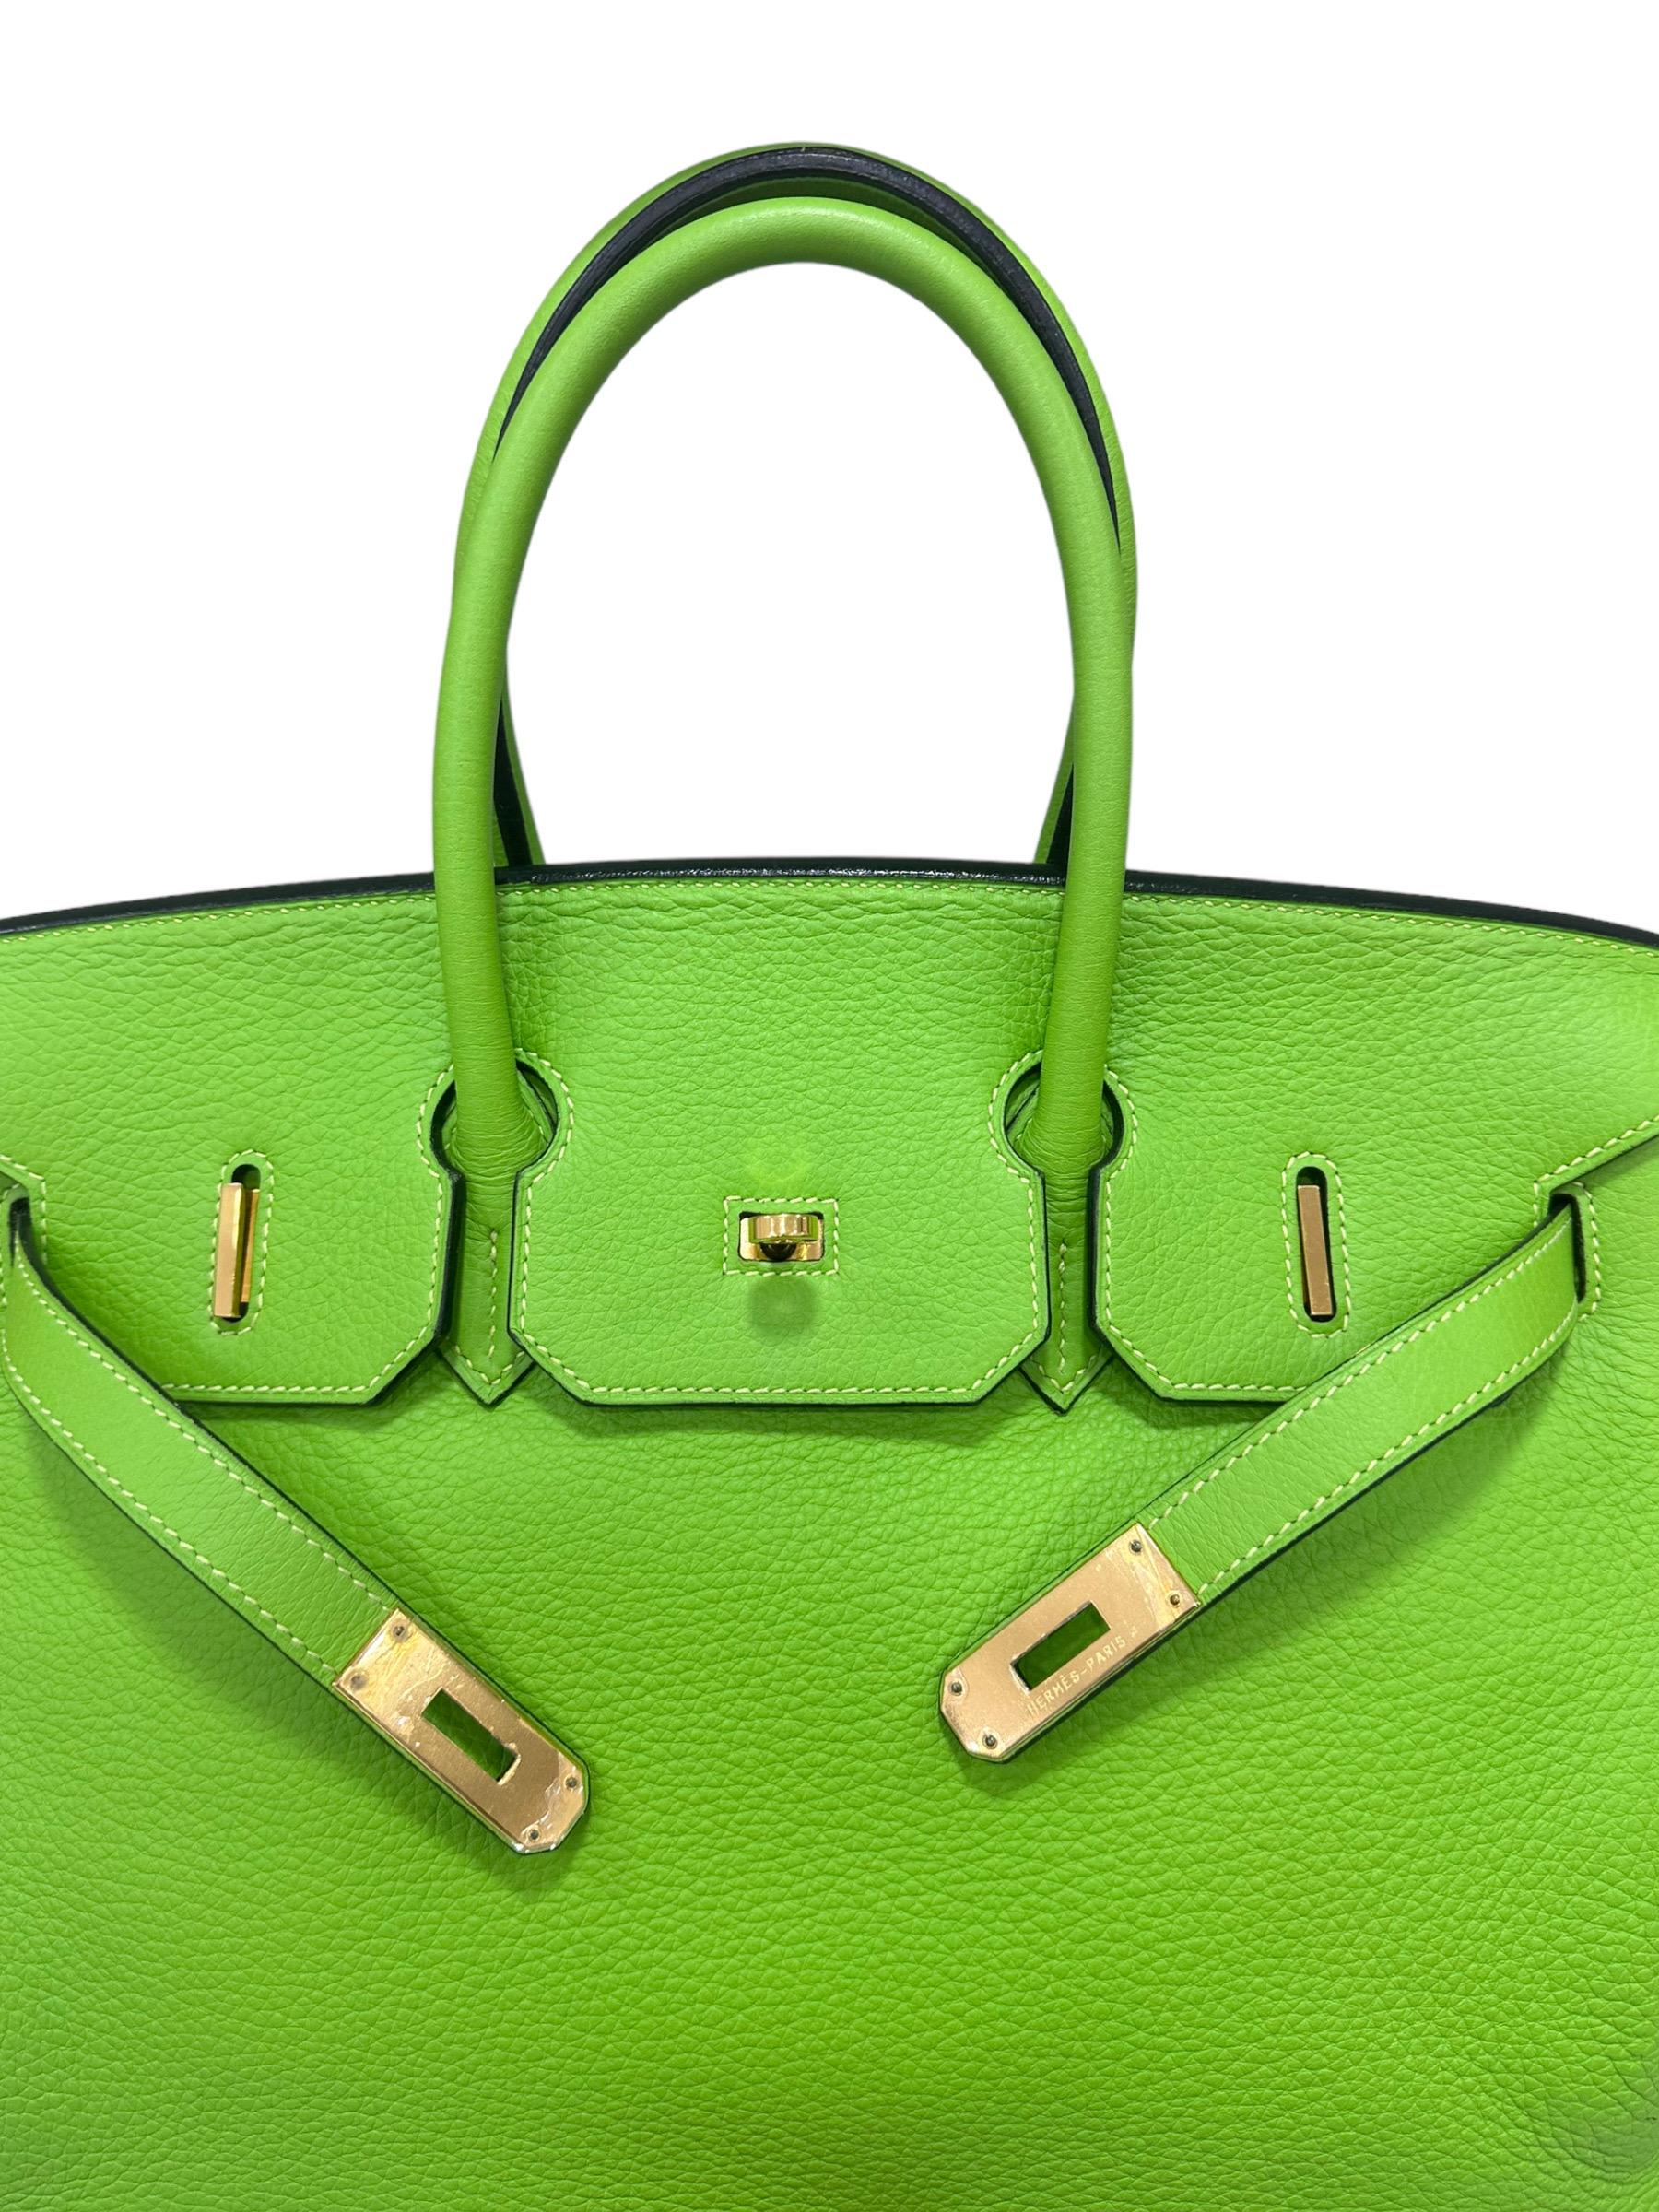 2004 Hermès Birkin 35 Clemence Leather Green Apple Top Handle Bag 11